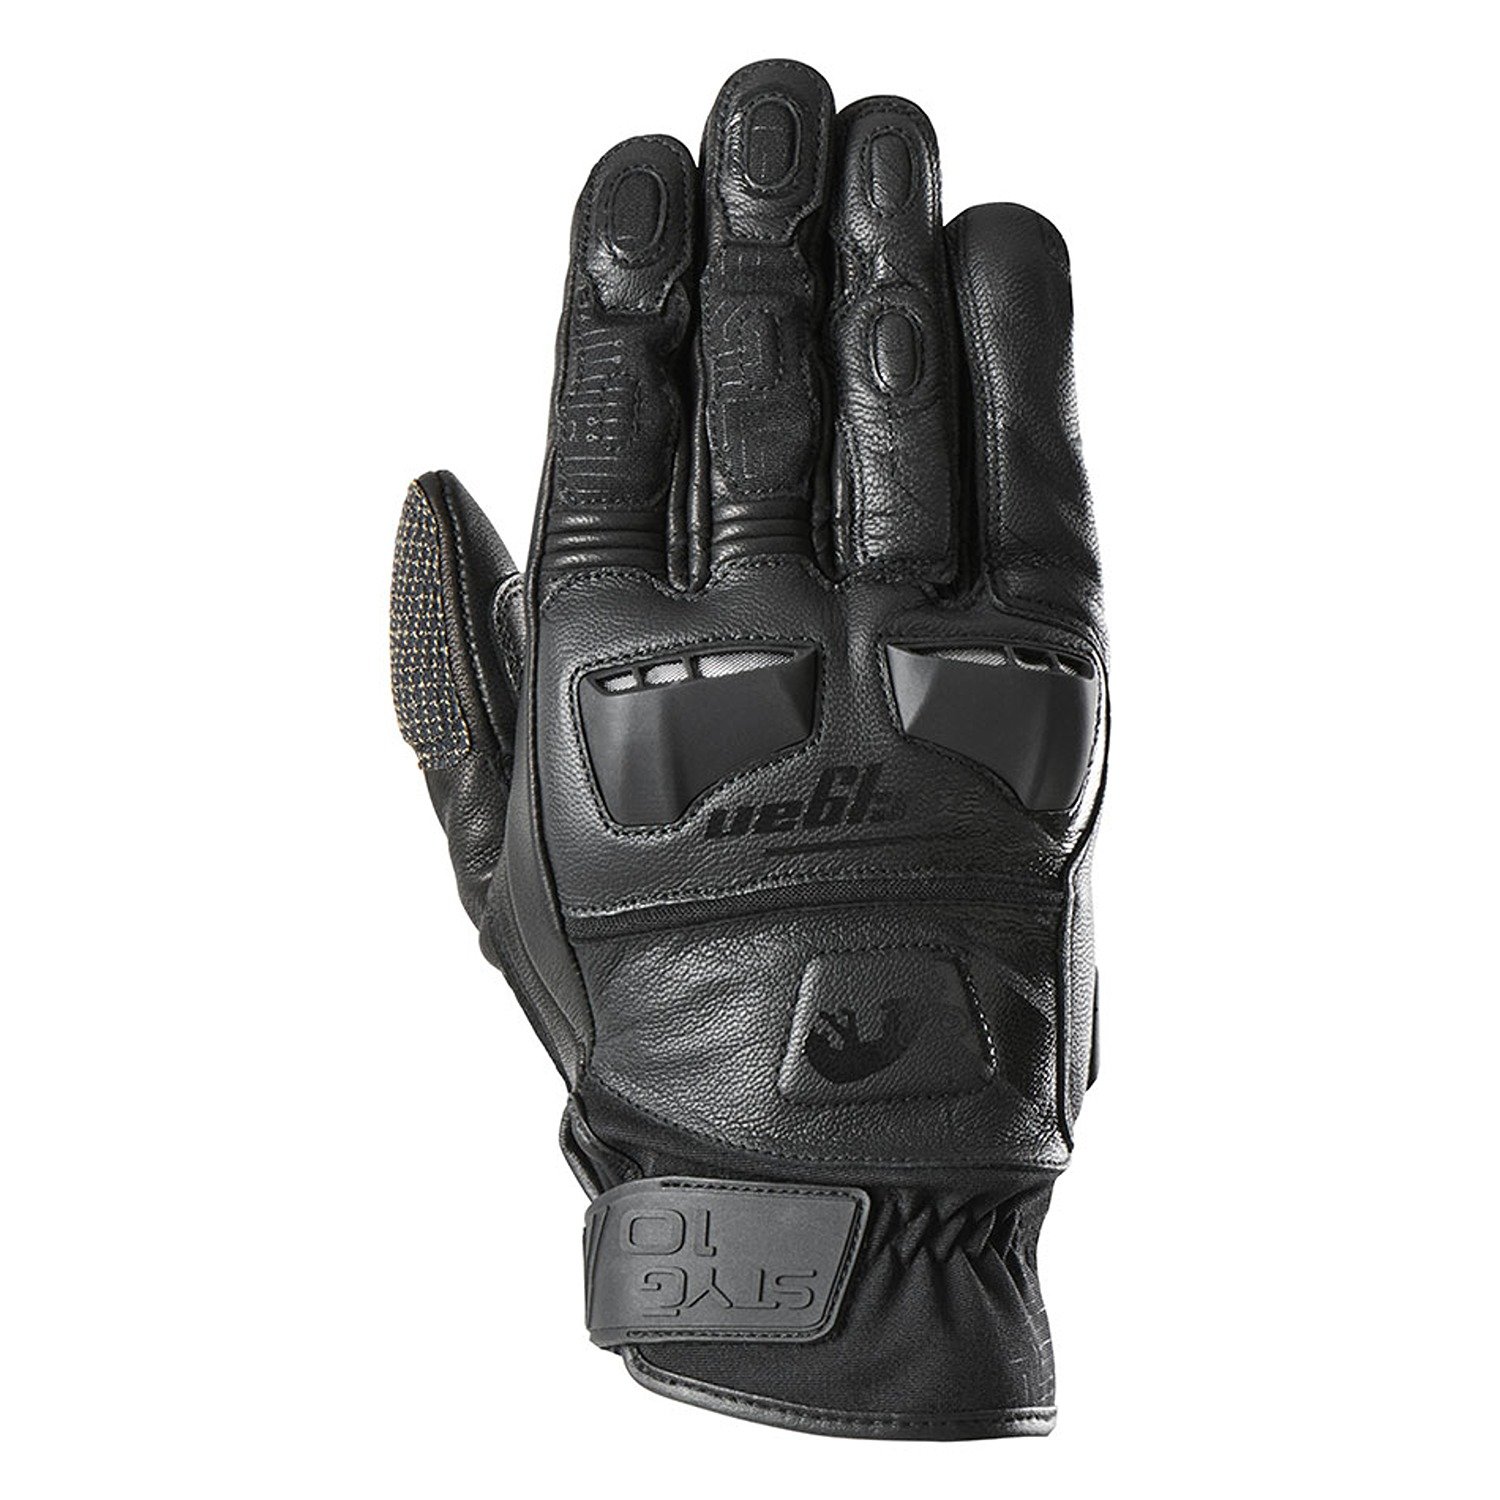 Image of Furygan Styg10 Gloves Black Size M ID 3435980379155